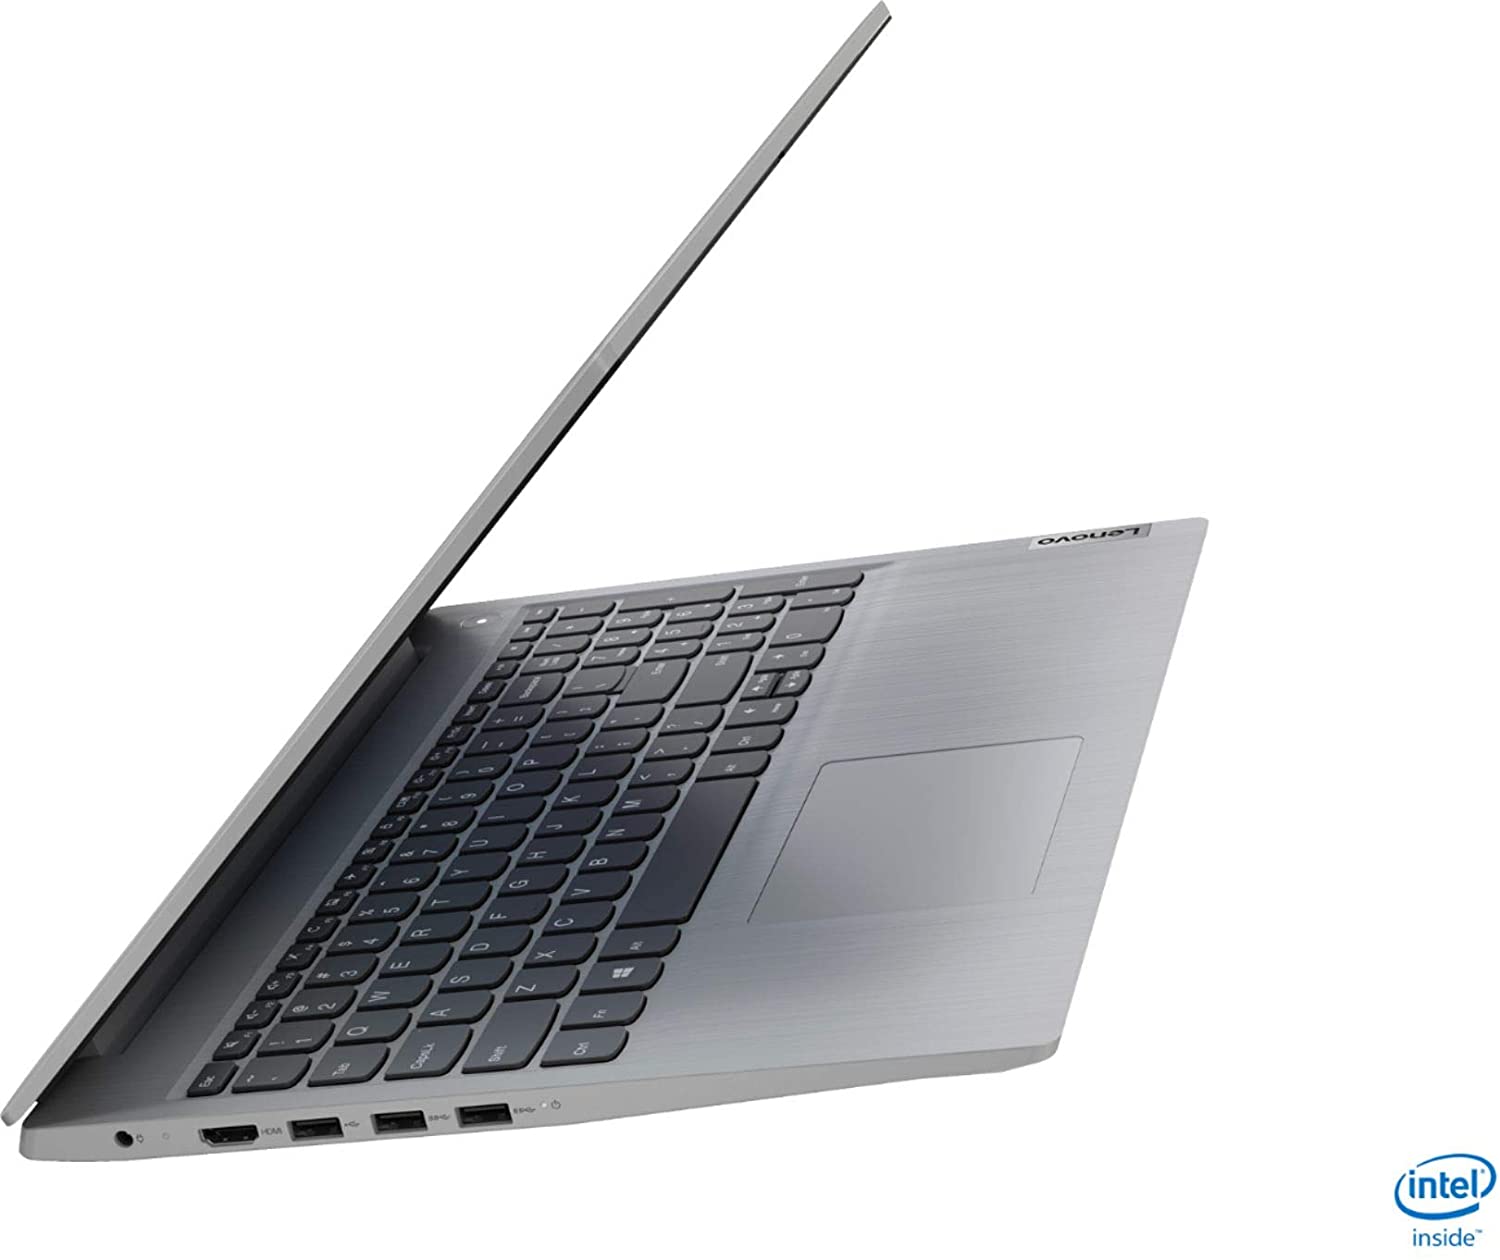 Lenovo - IdeaPad 3 15" Laptop - Intel Core i3-1005G1 - 8GB Memory - 256GB SSD - Platinum Grey - 81WE011UUS - image 2 of 6